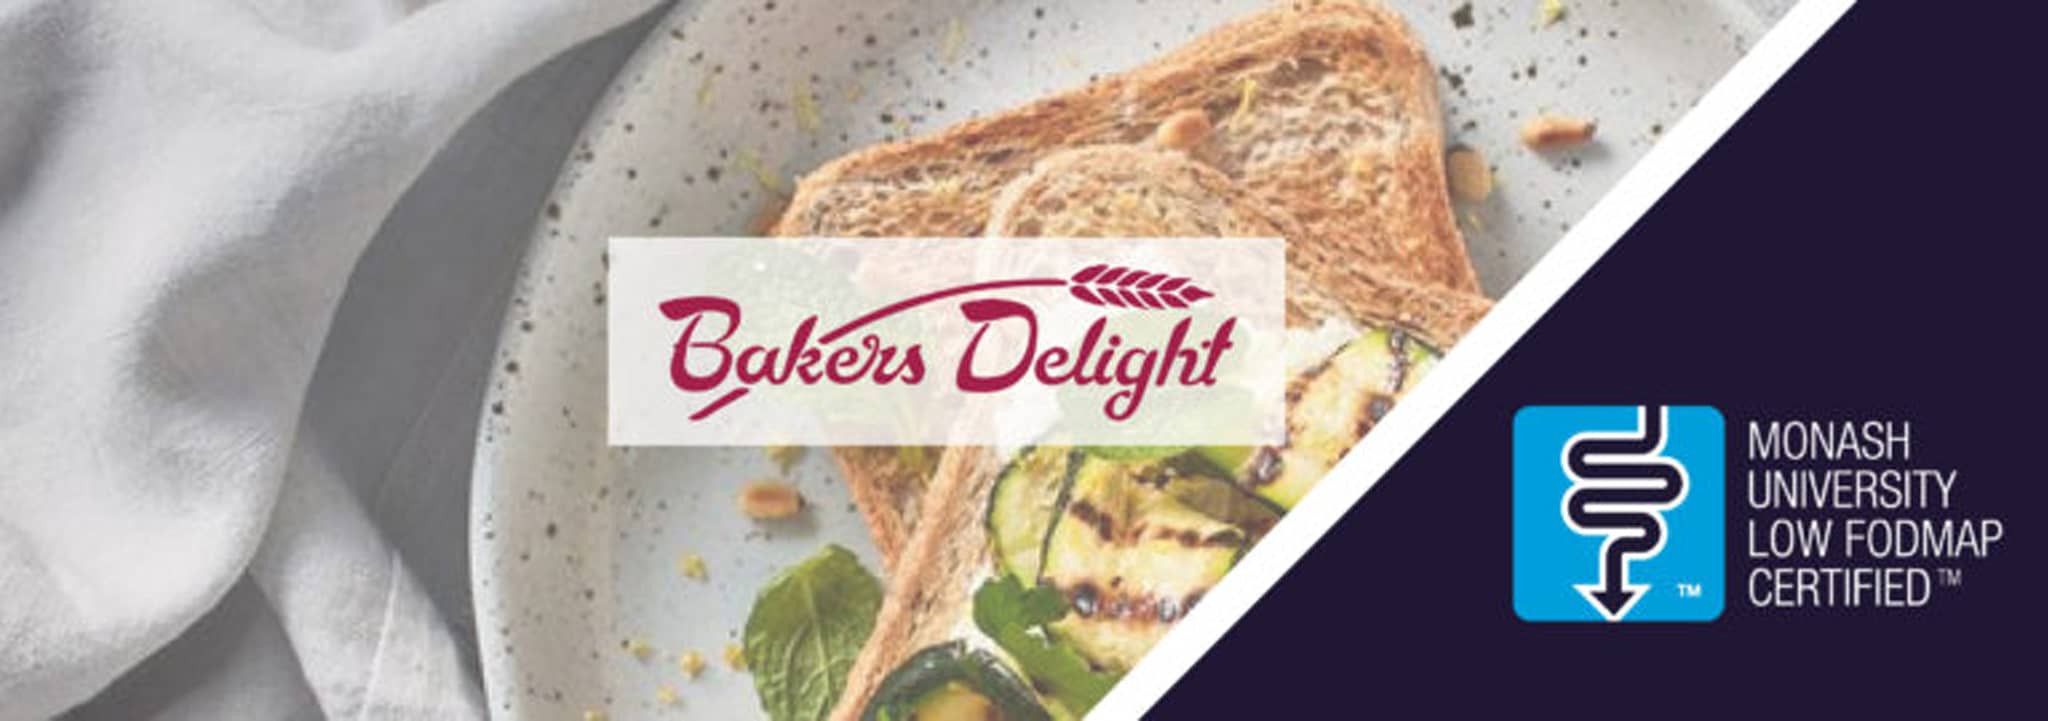 Monash University & Bakers Delight announce partnership